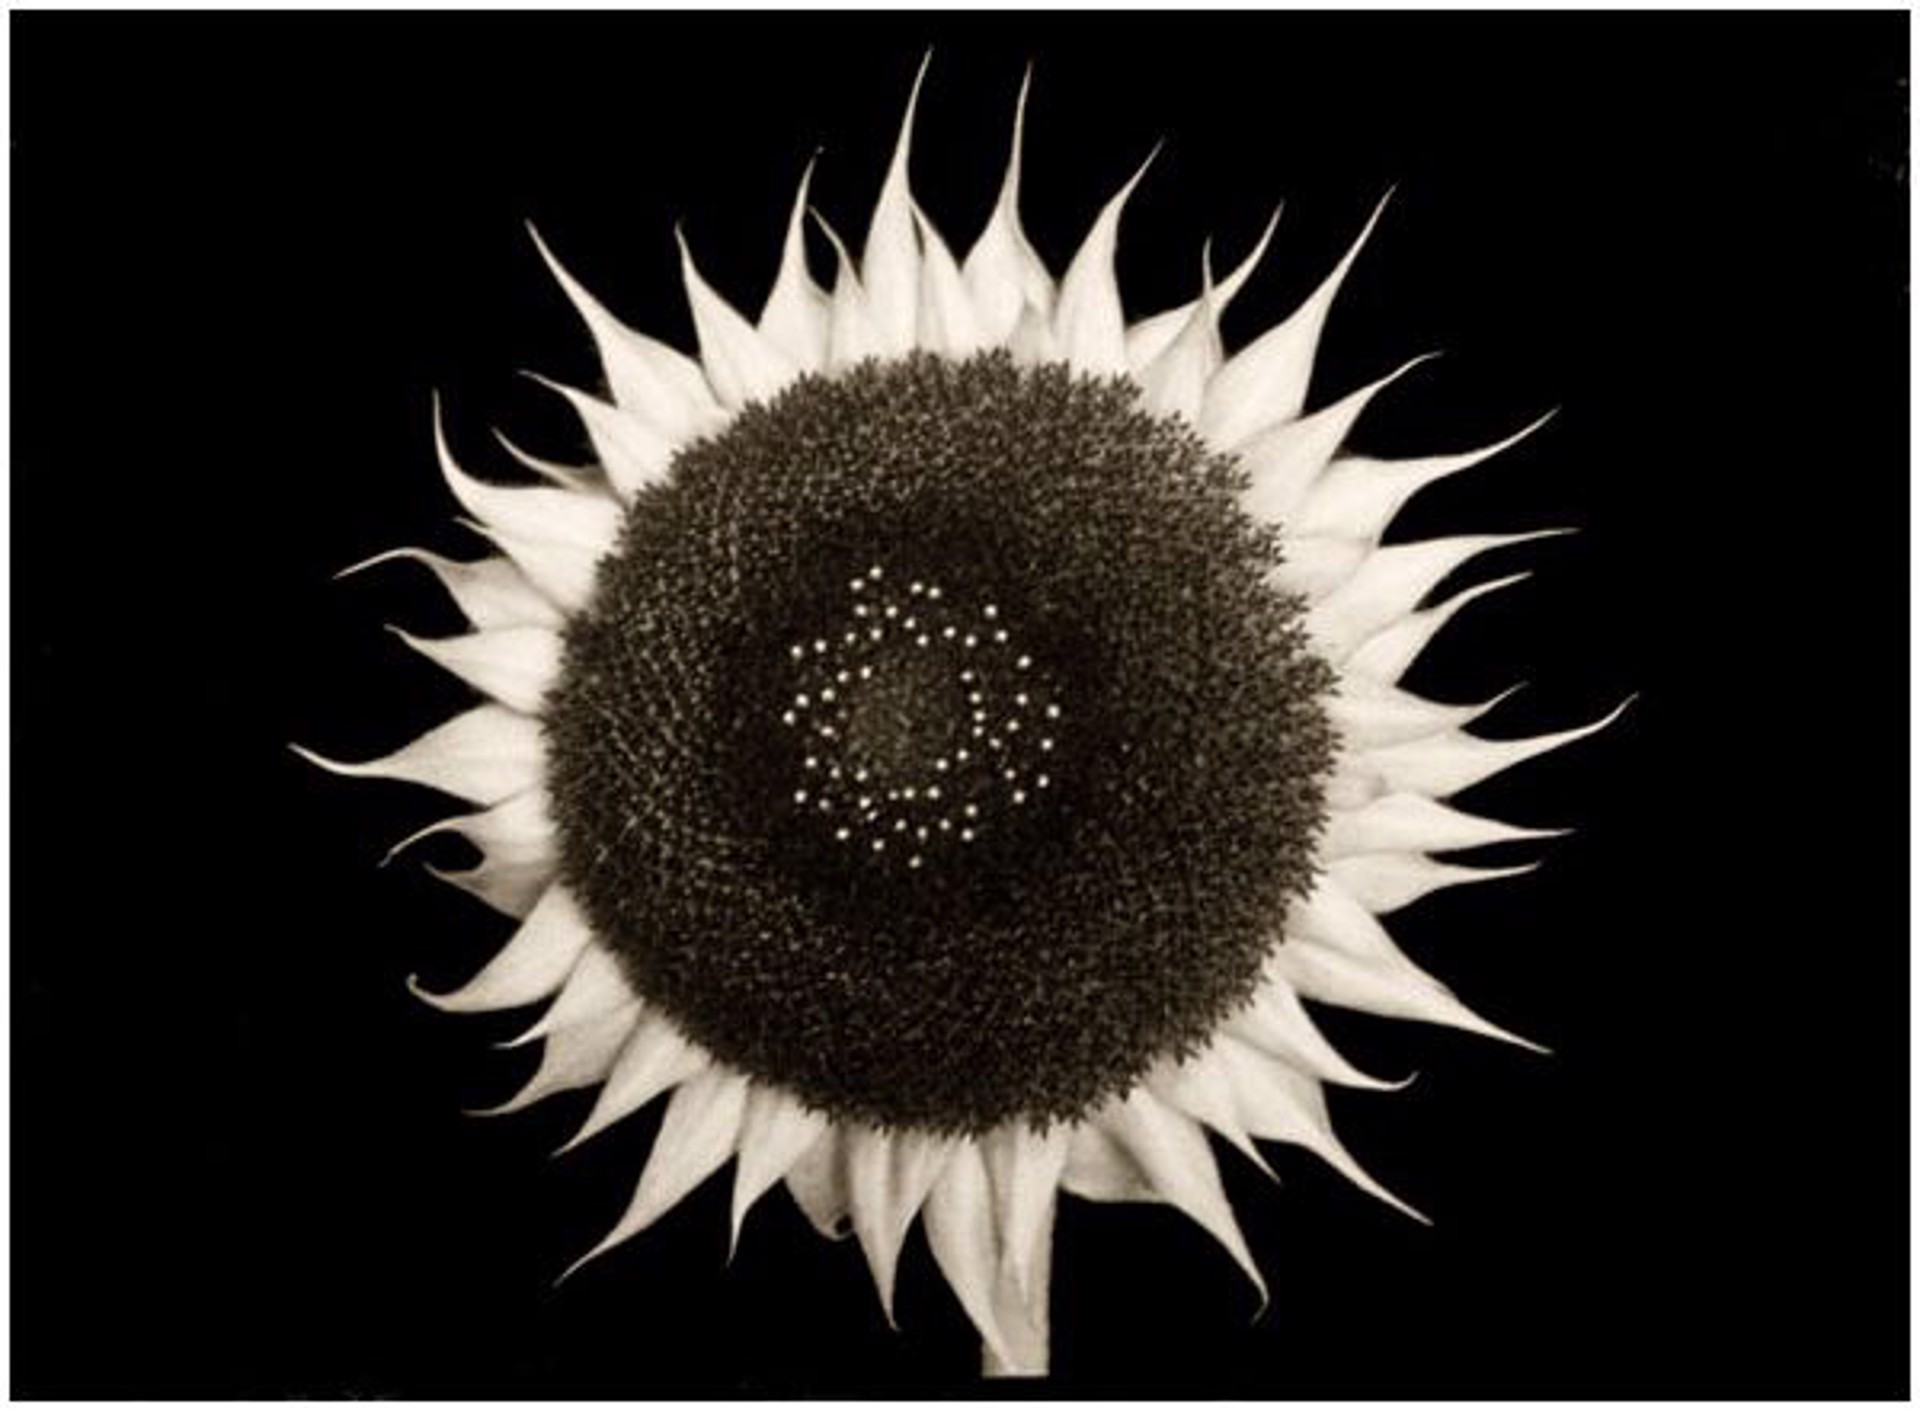 Sunflower #51 by Frank Hunter